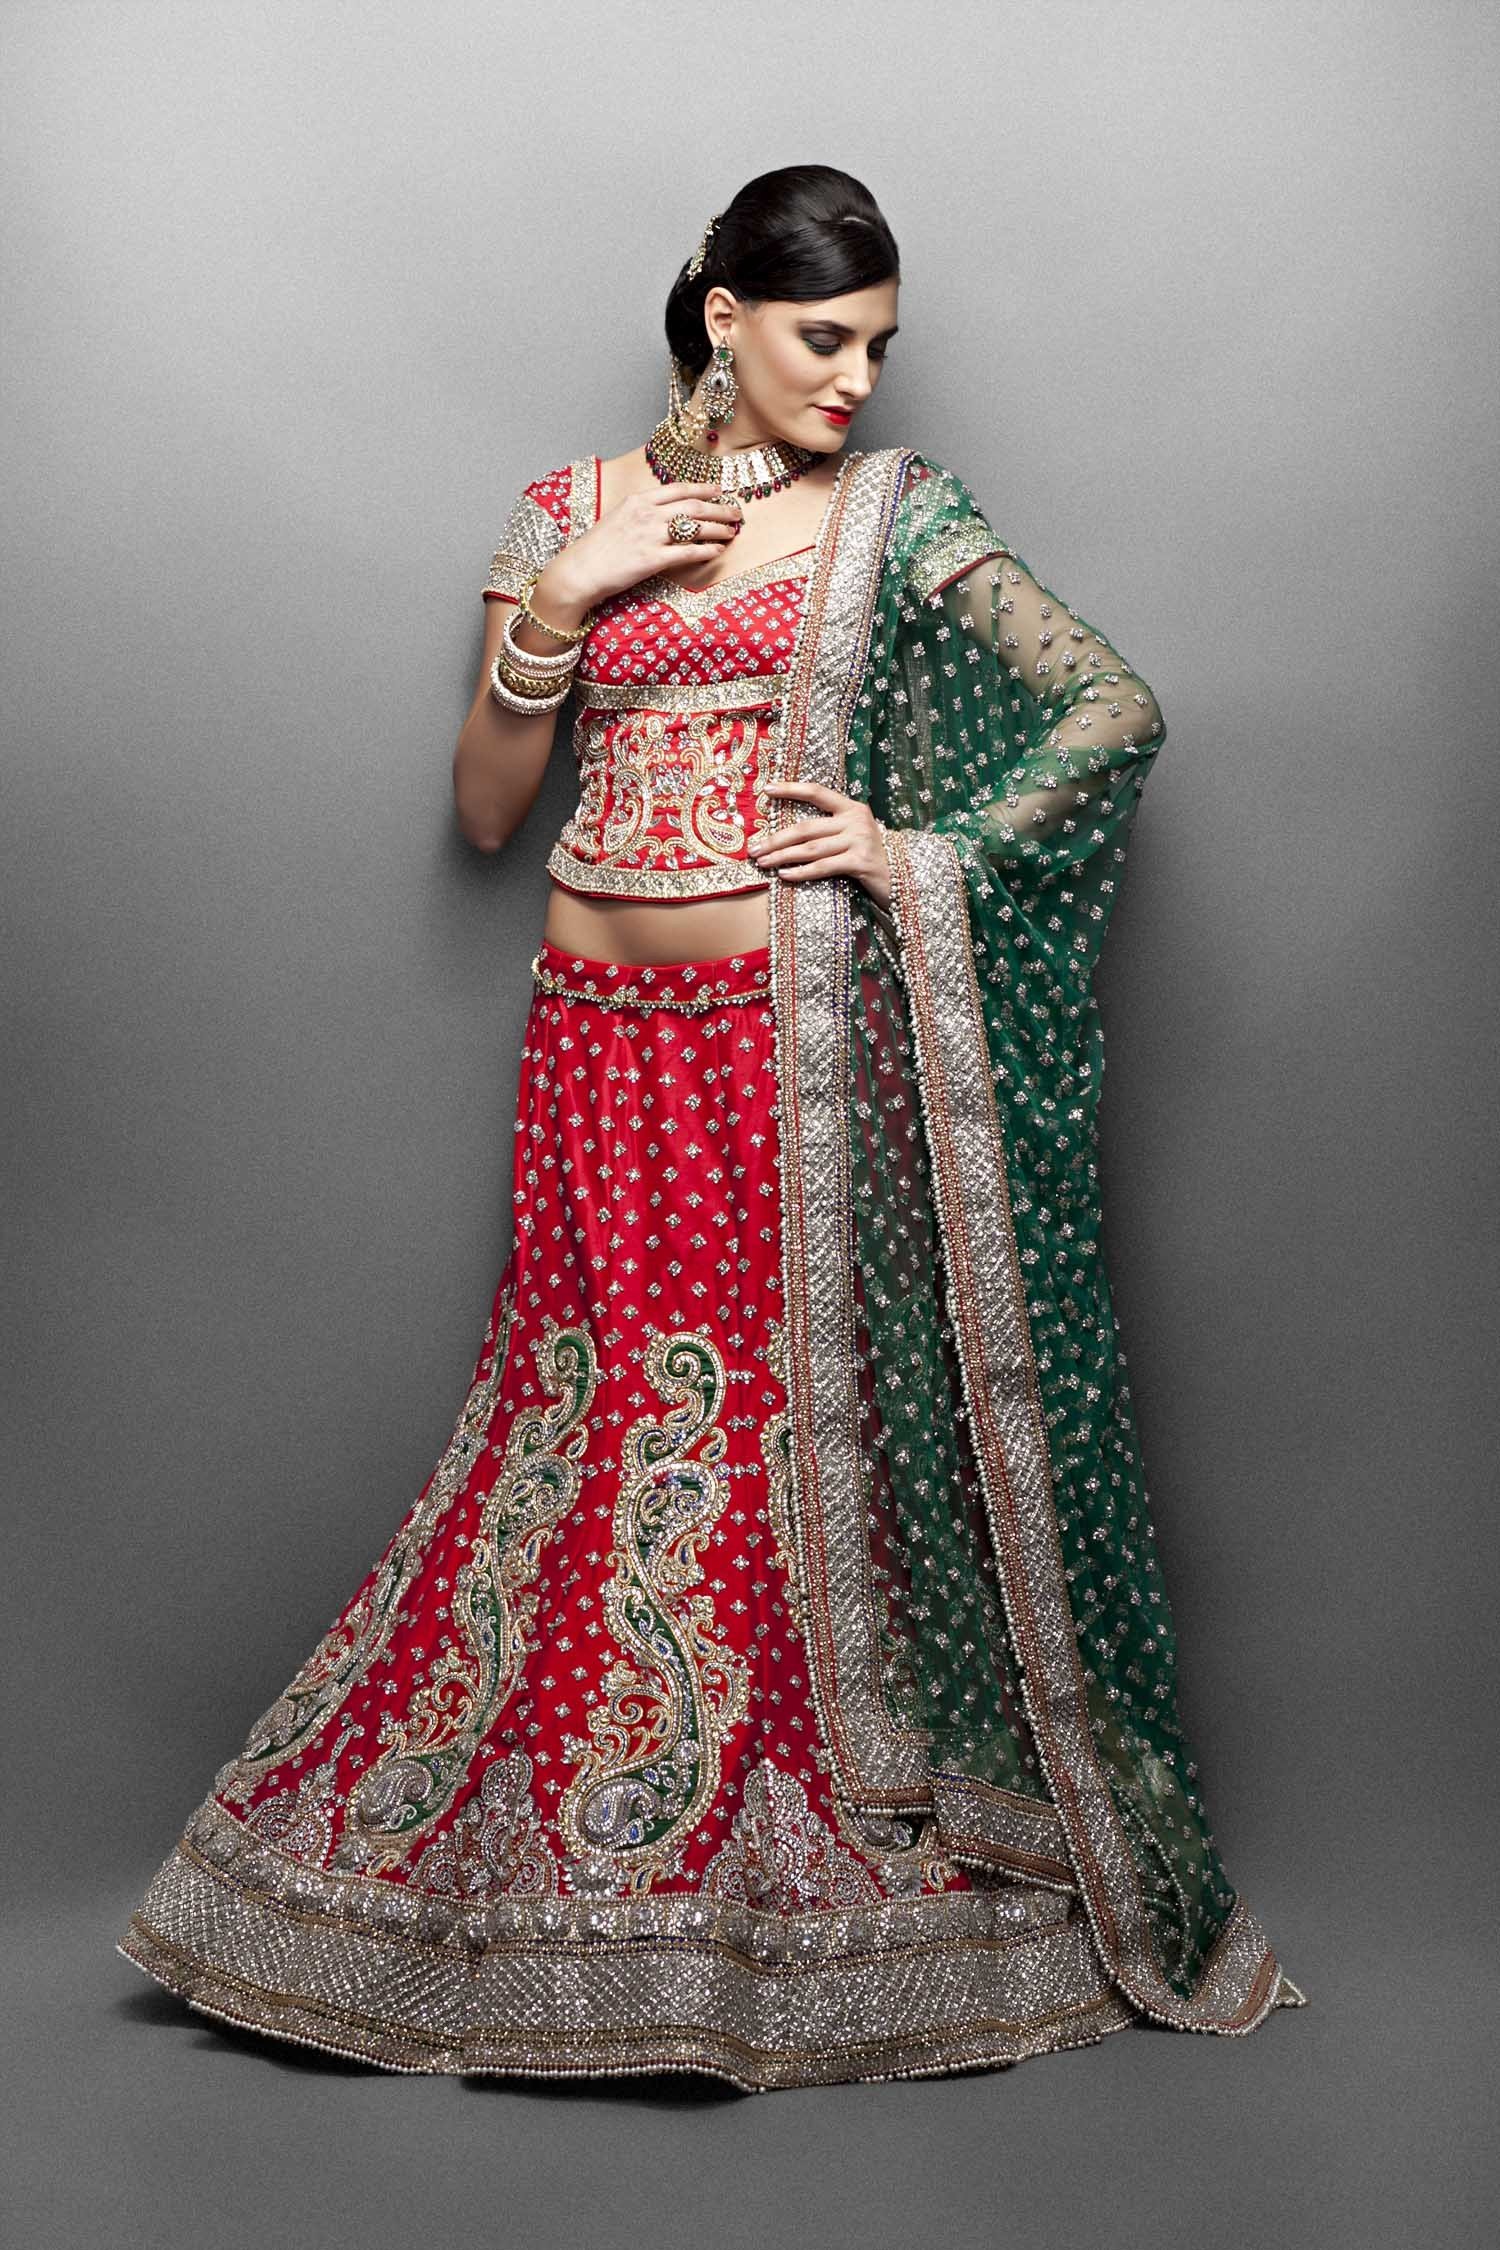 Georgette Wedding Lehenga Choli In Light Brown Color | Bridal lehenga  choli, Indian wedding dress, Designer lehenga choli